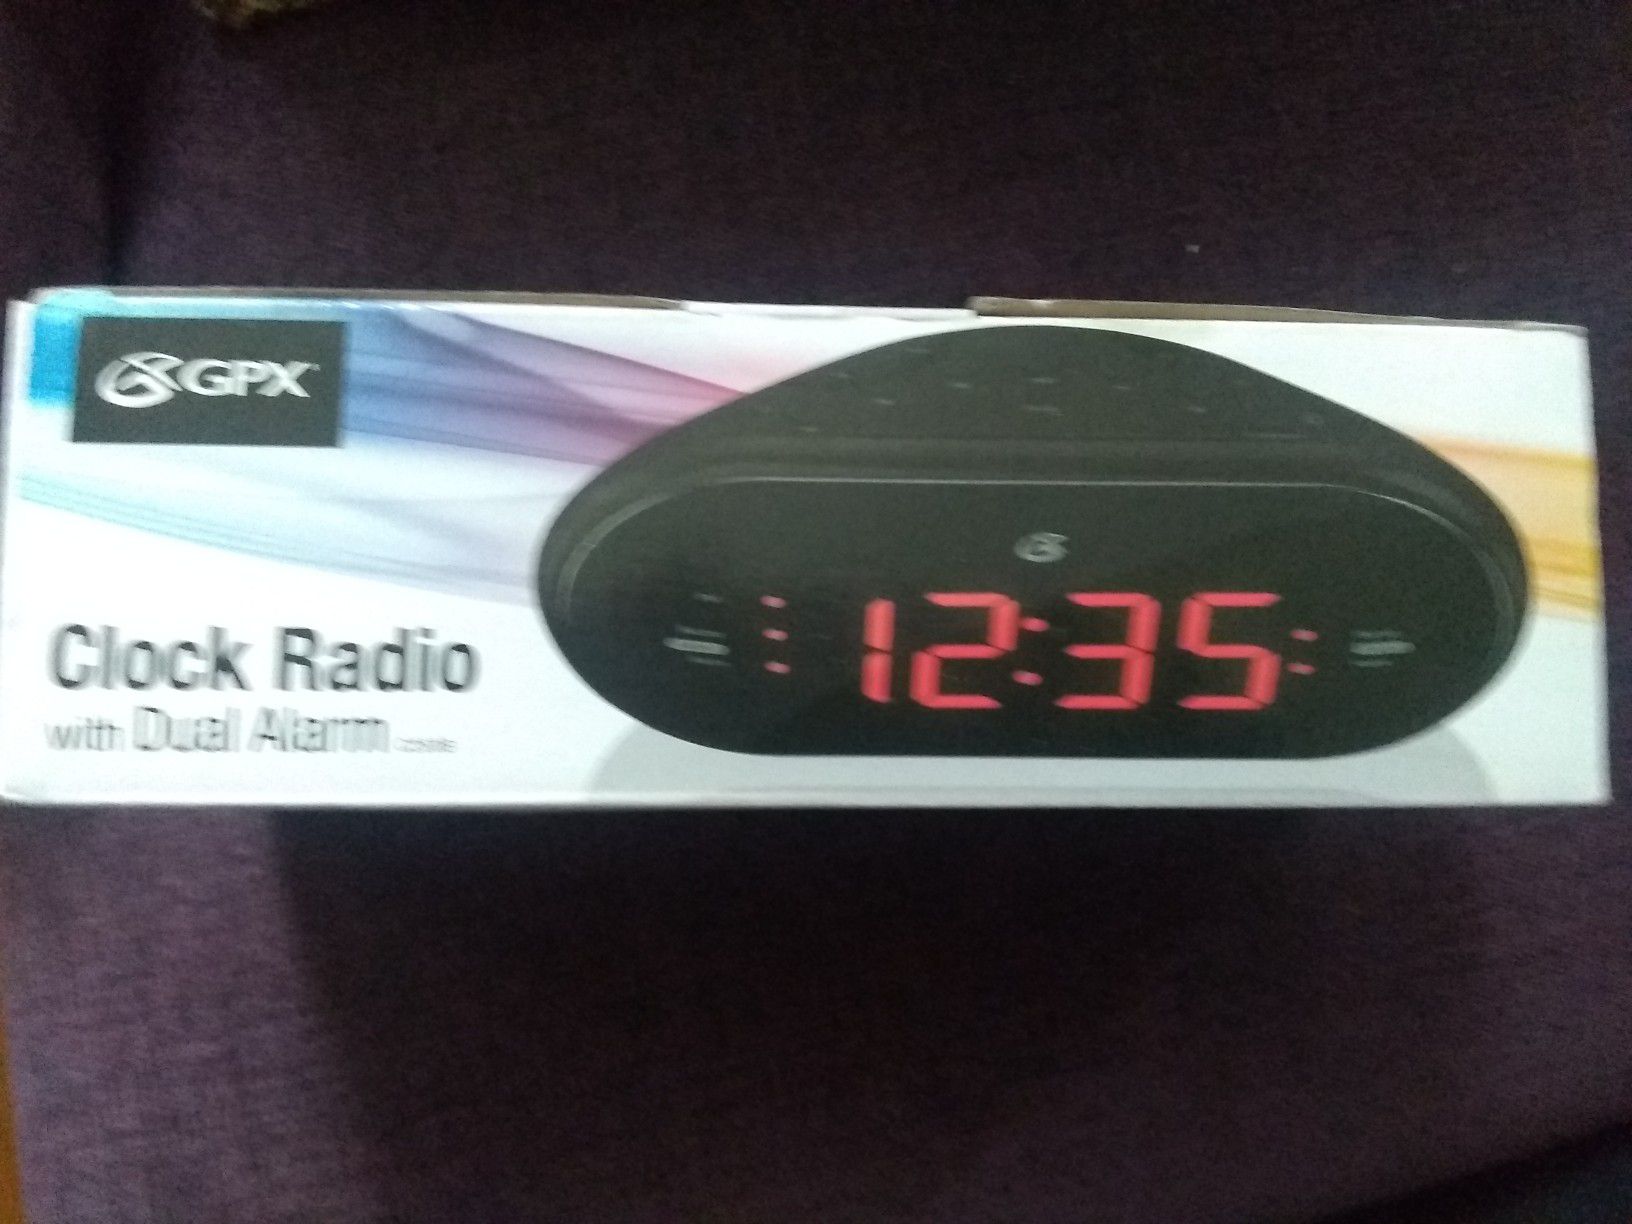 Alarm clock and radio